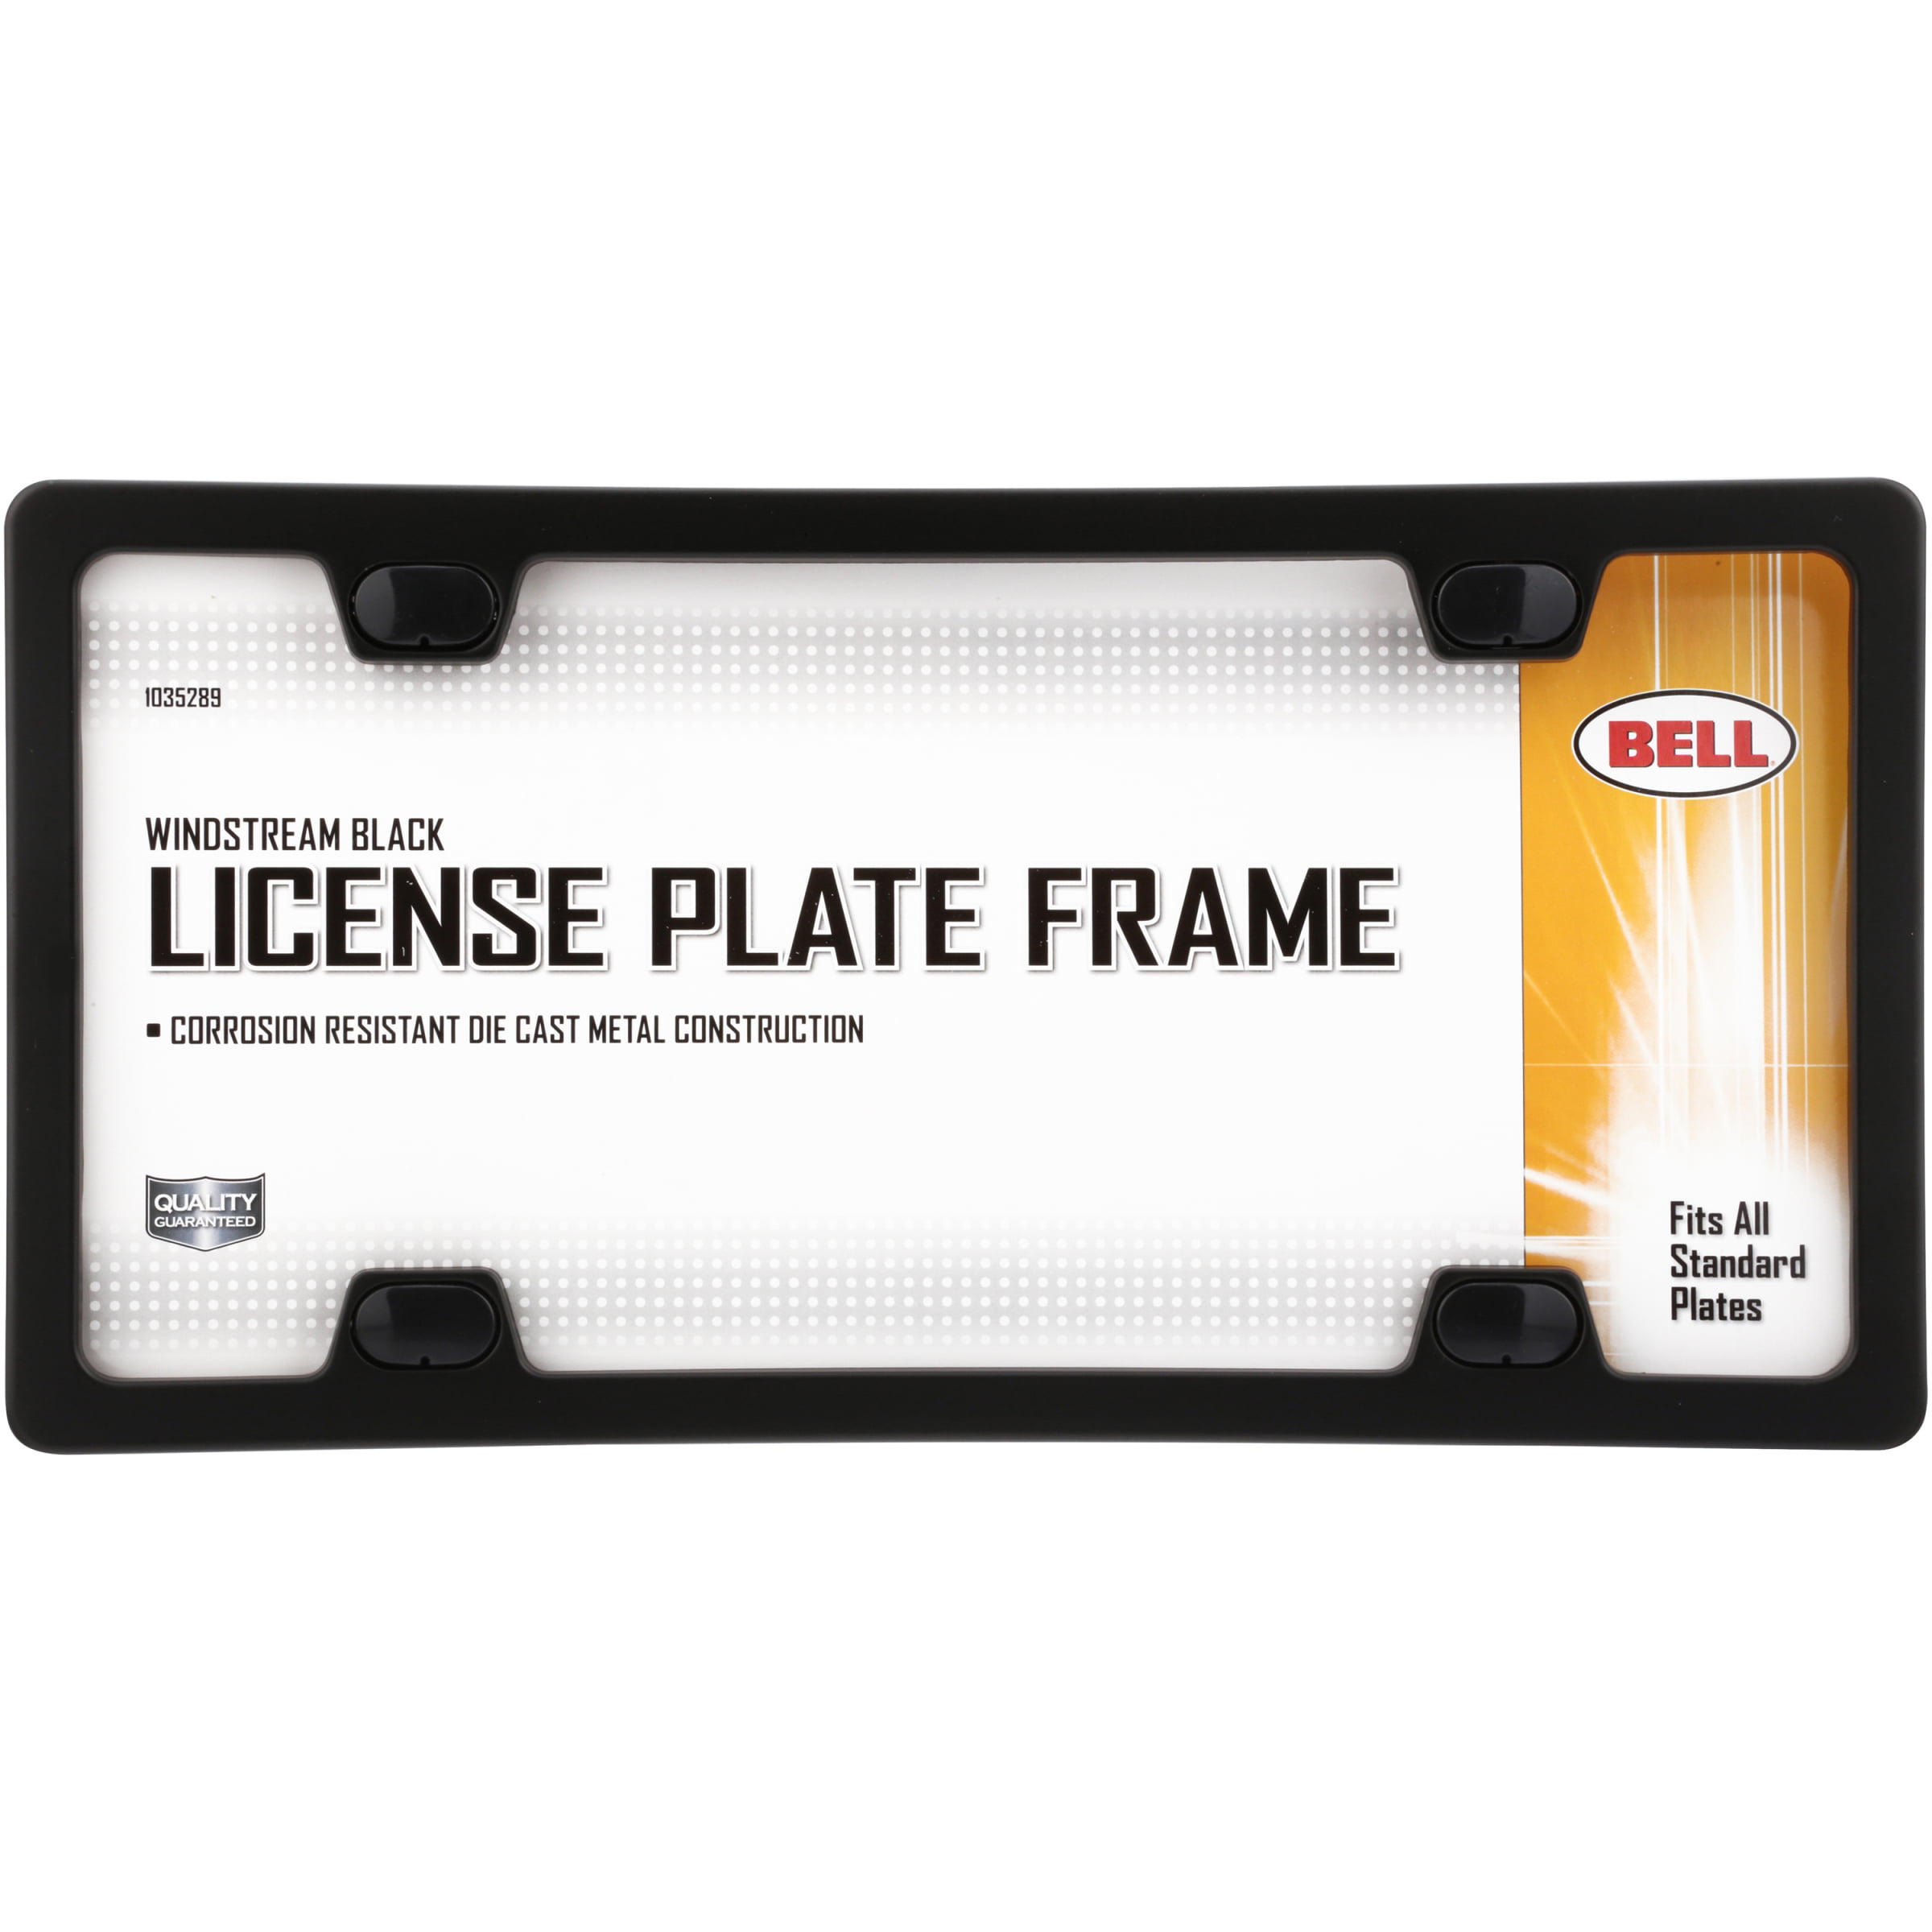 THE MILLER FAMILY FUNNY Metal License Plate Frame Tag Holder